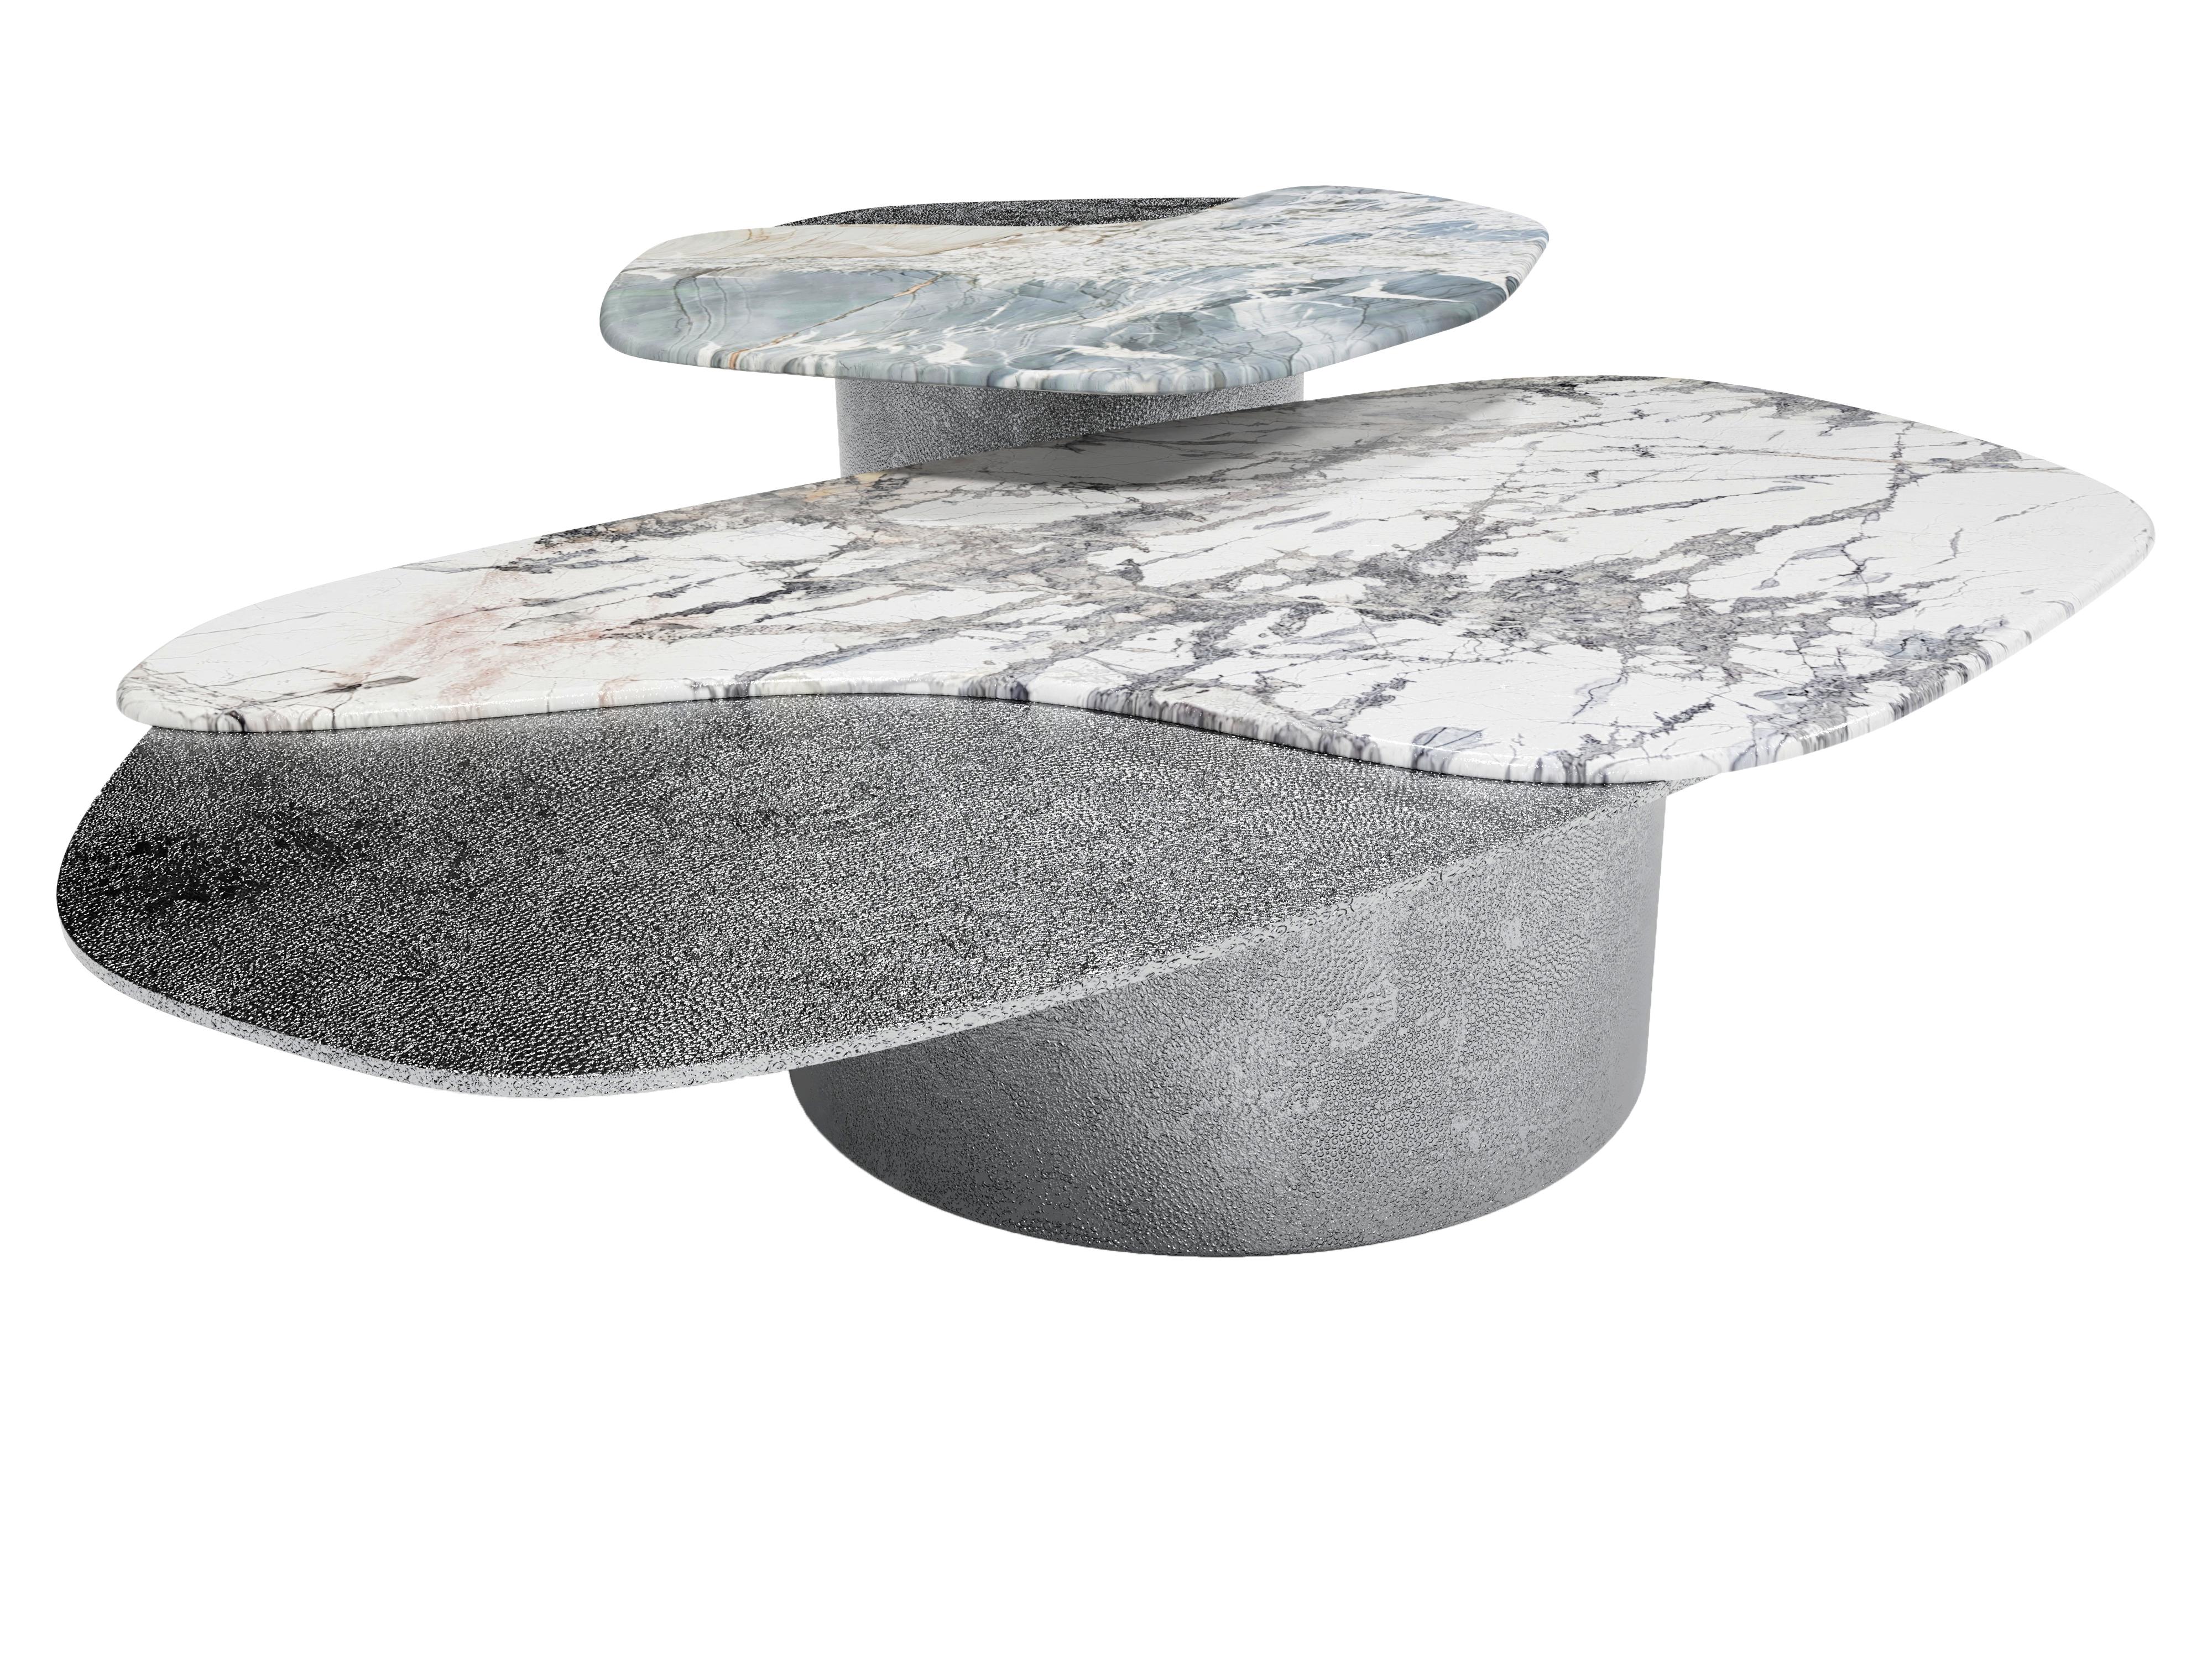 Aluminum The Epicure IV Coffee Table Set, 1 of 1 by Grzegorz Majka